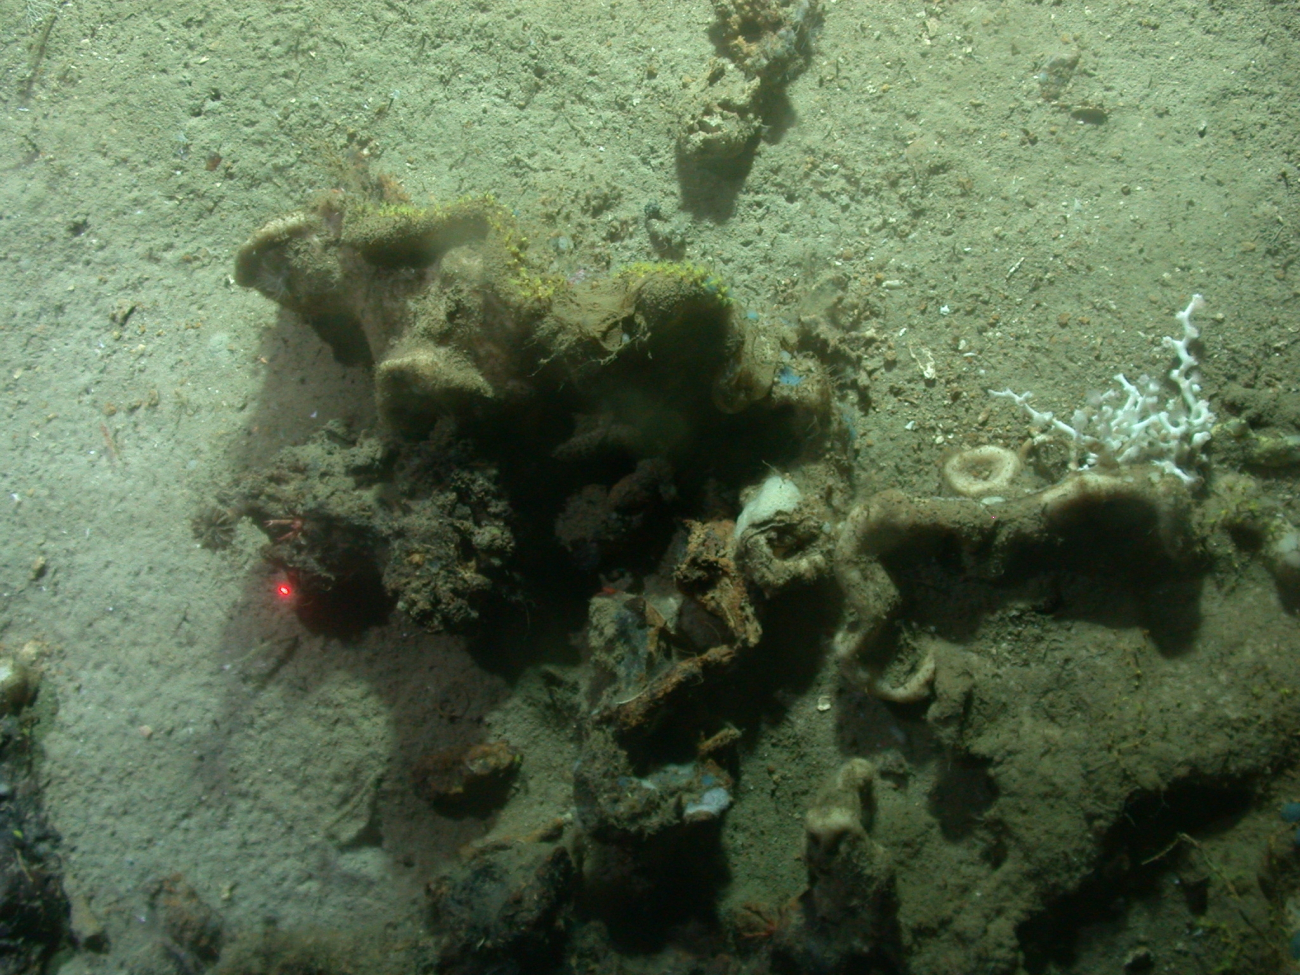 Marine debris?  Sponges surrounding what appears to be old iron debris